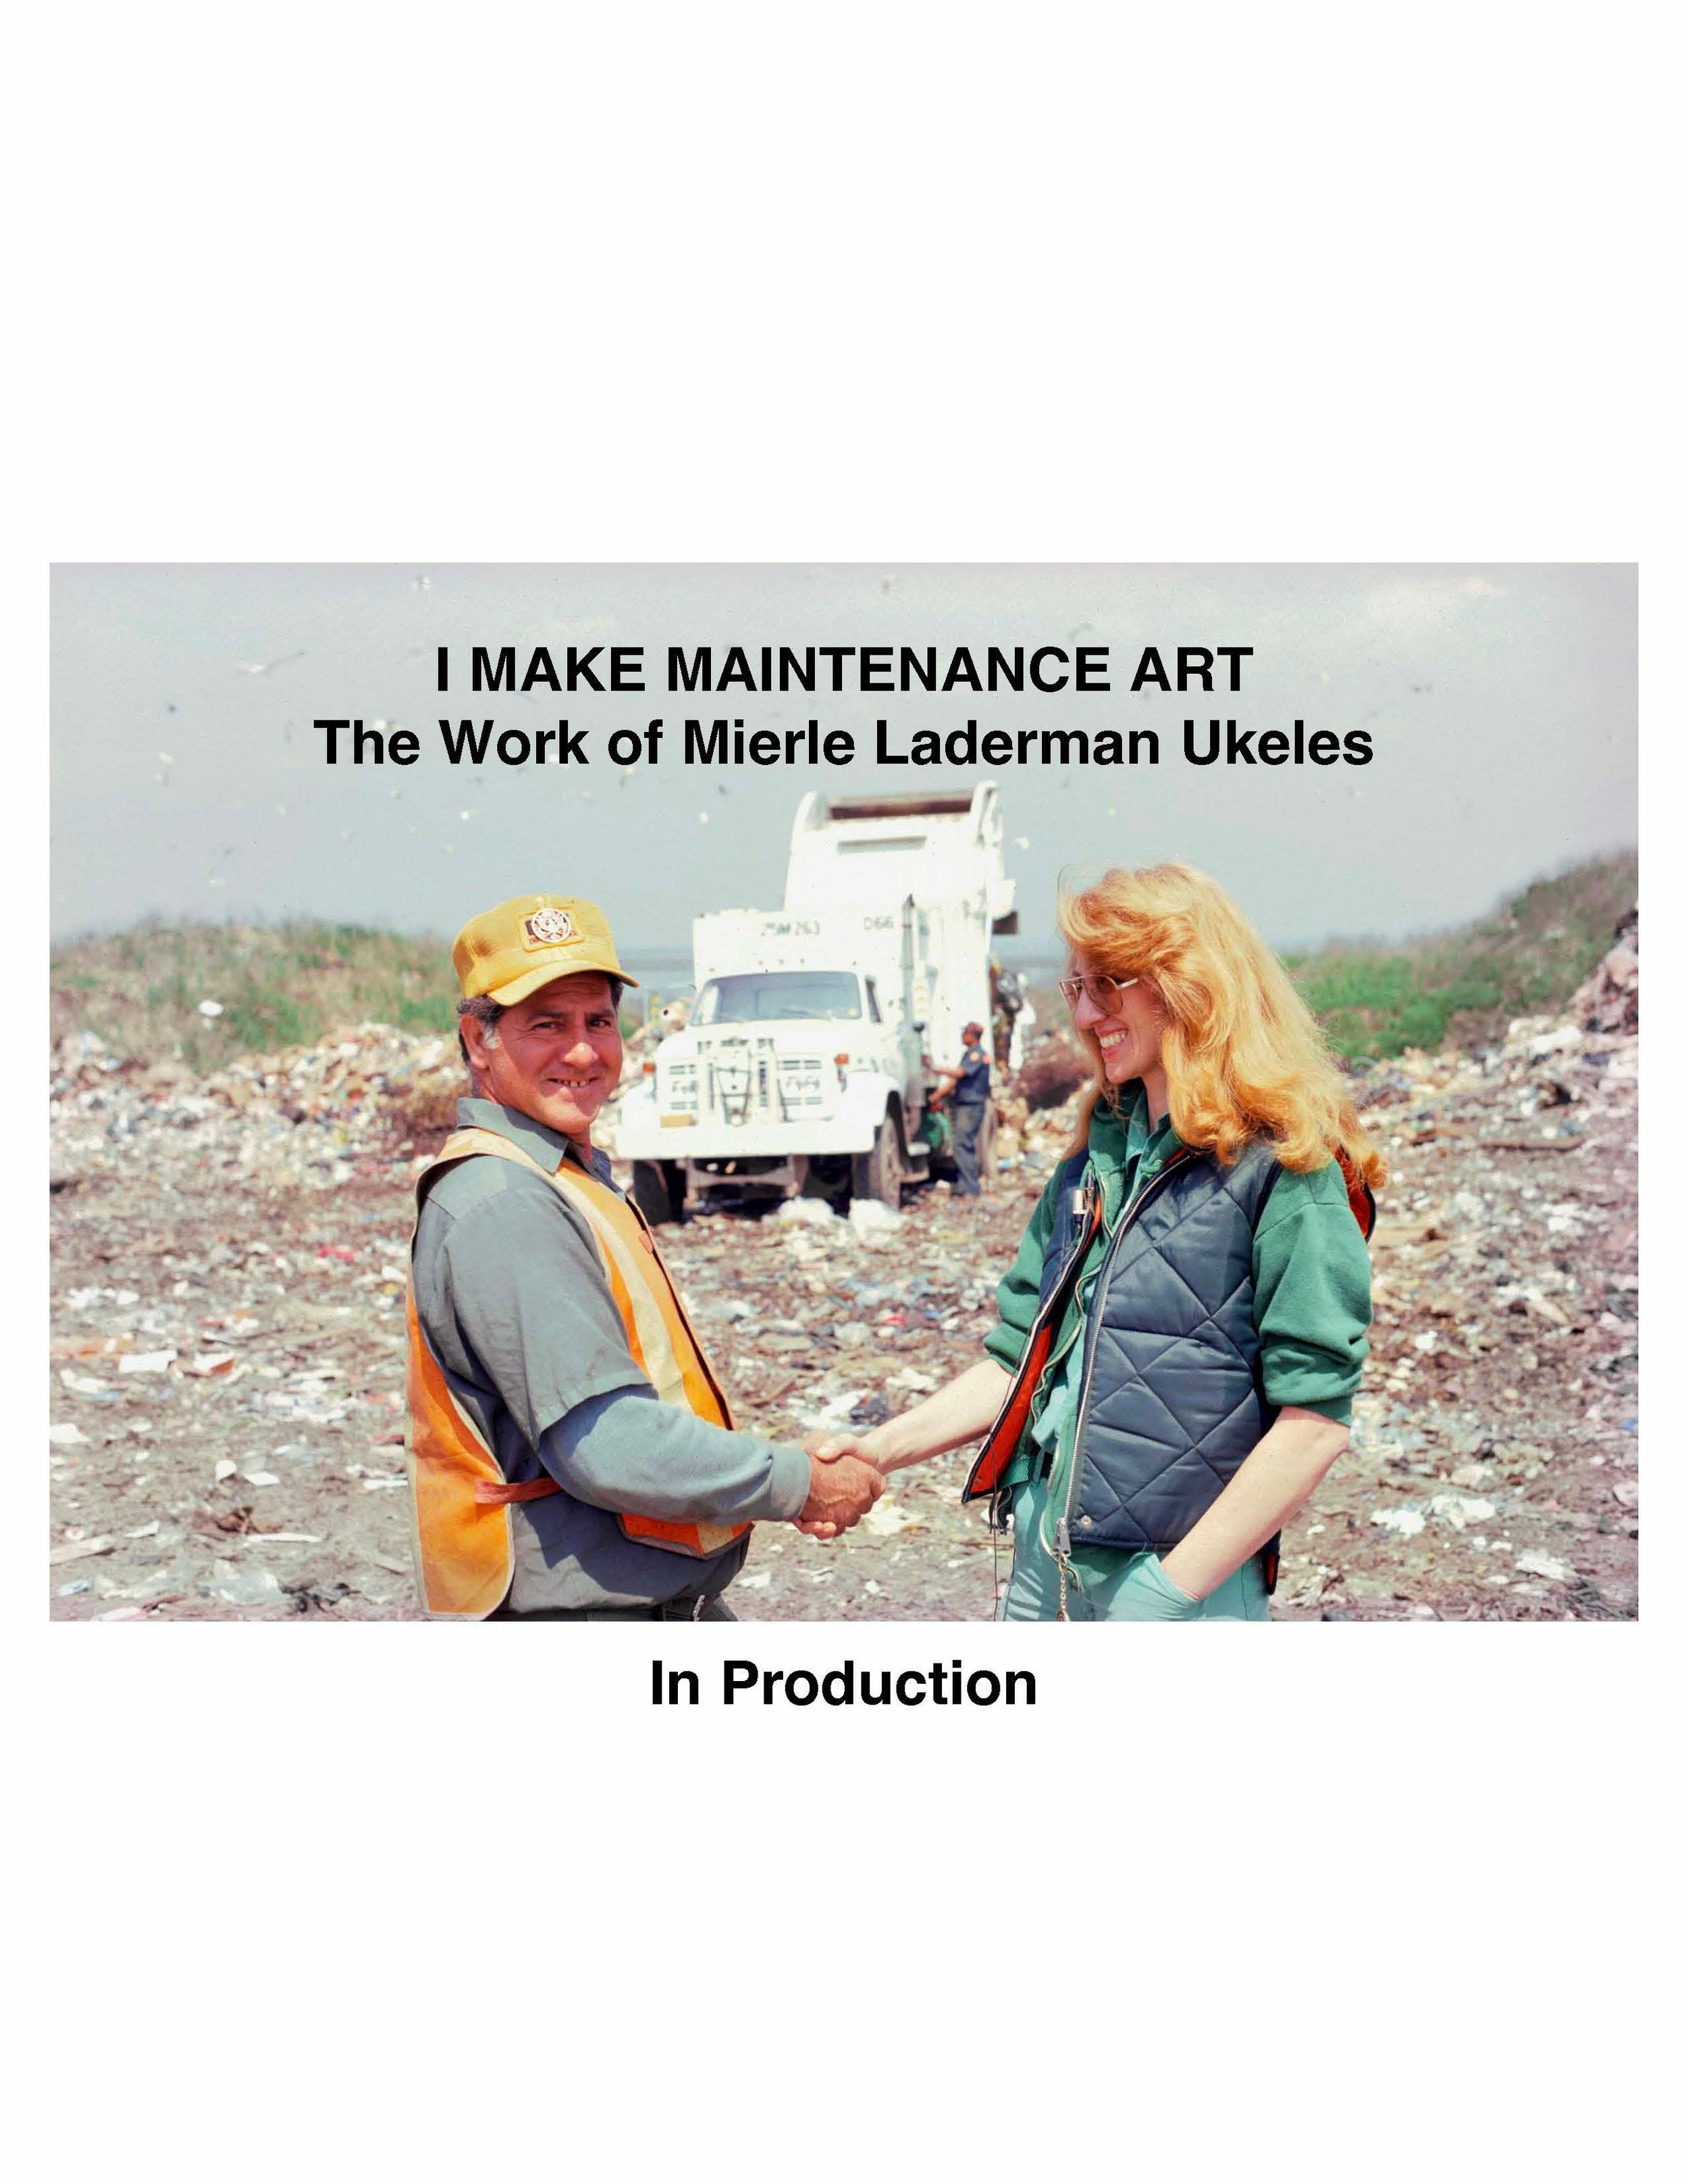 I MAKE MAINTENANCE ART: The Work of Mierle Laderman Ukeles